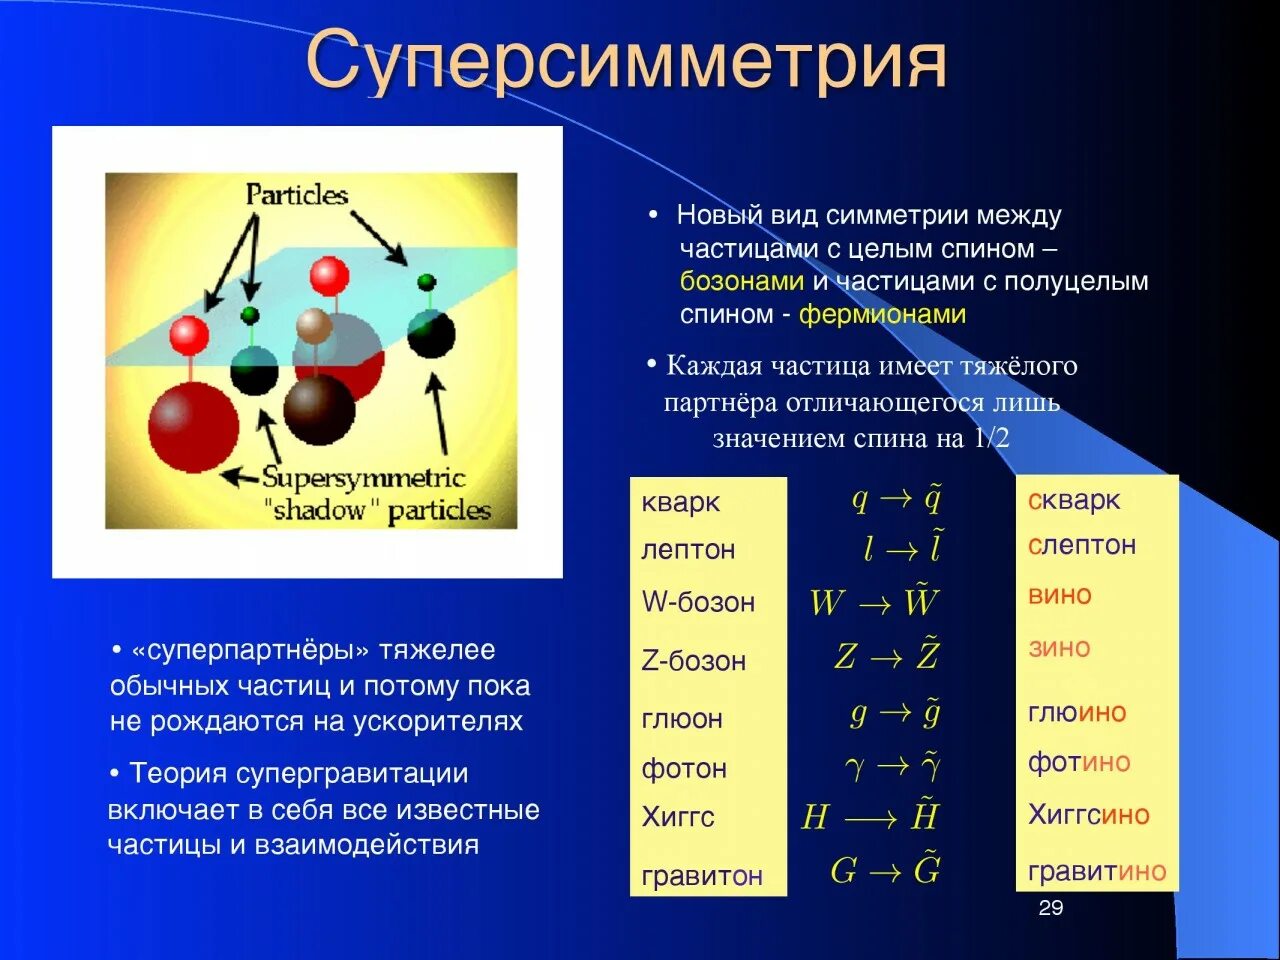 Теория суперсимметрии. Суперсимметрия в физике. Суперсимметрия таблица частиц. Что такое суперсимметрия в физике элементарных частиц?. Связанная система элементарных частиц содержит 36 электронов